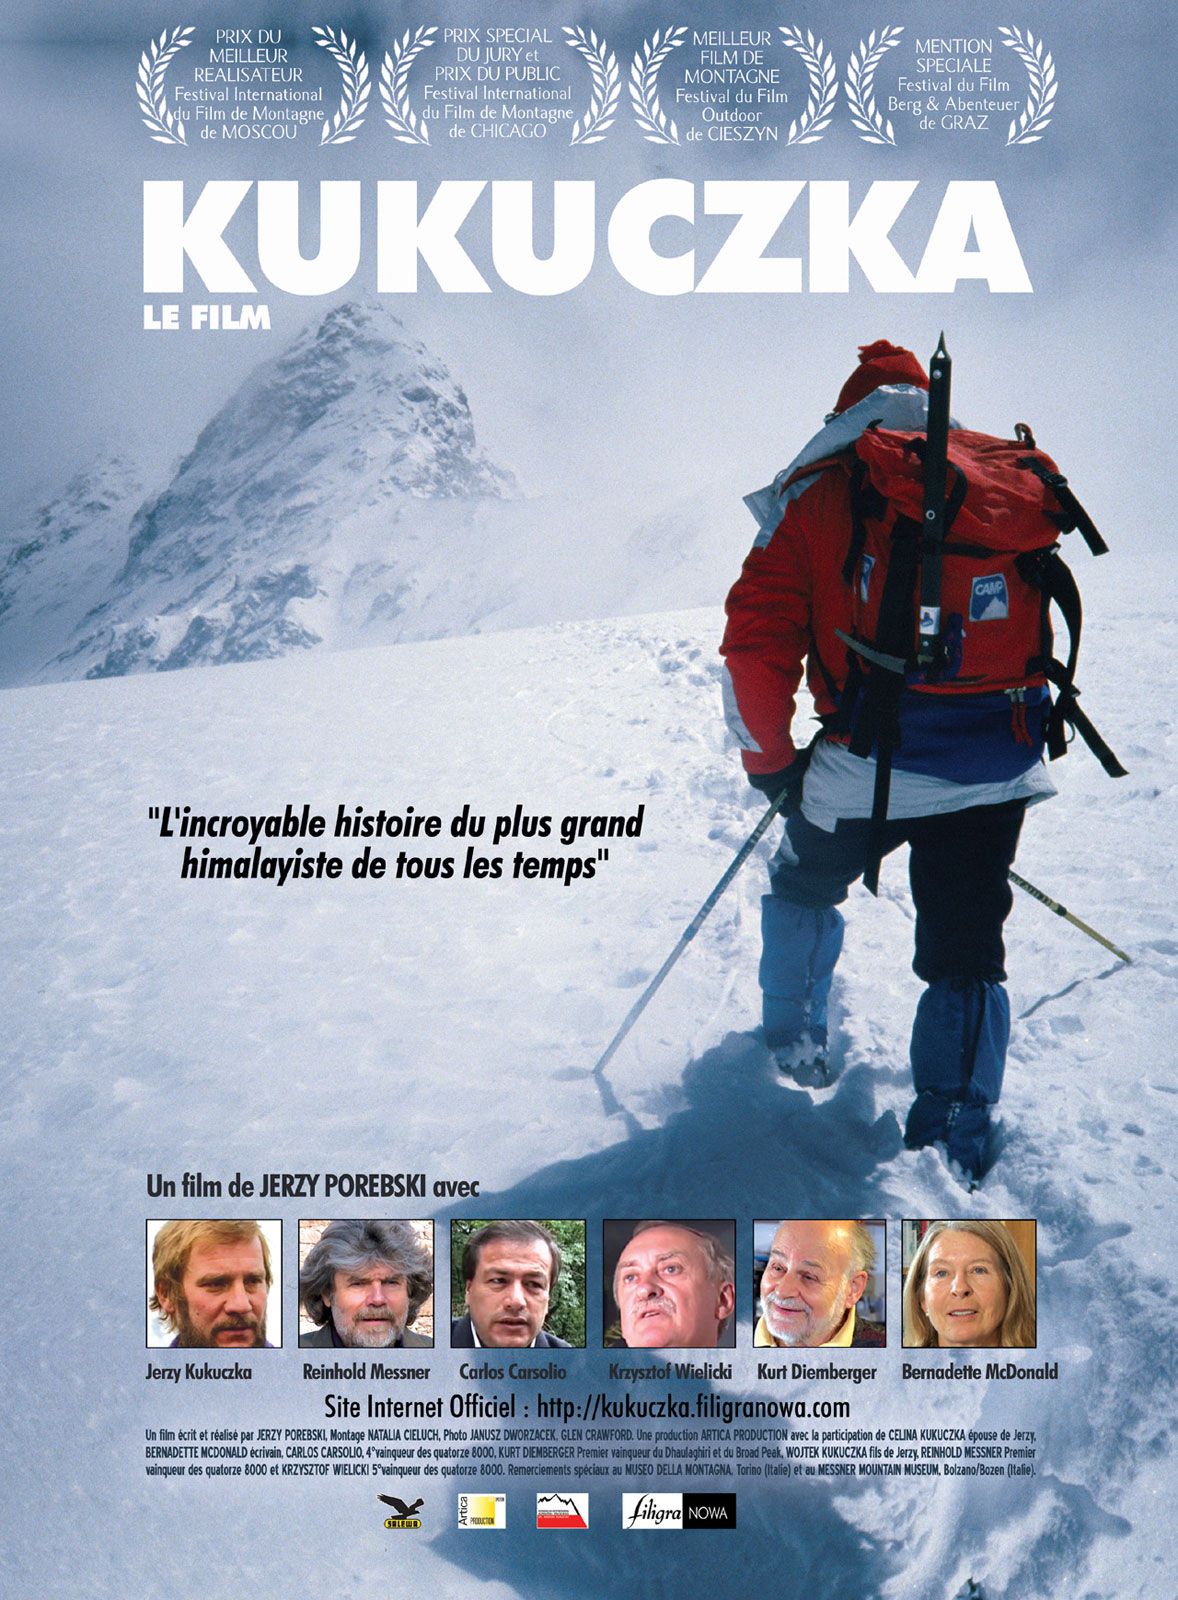 Kukuczka - Documentaire (2012)